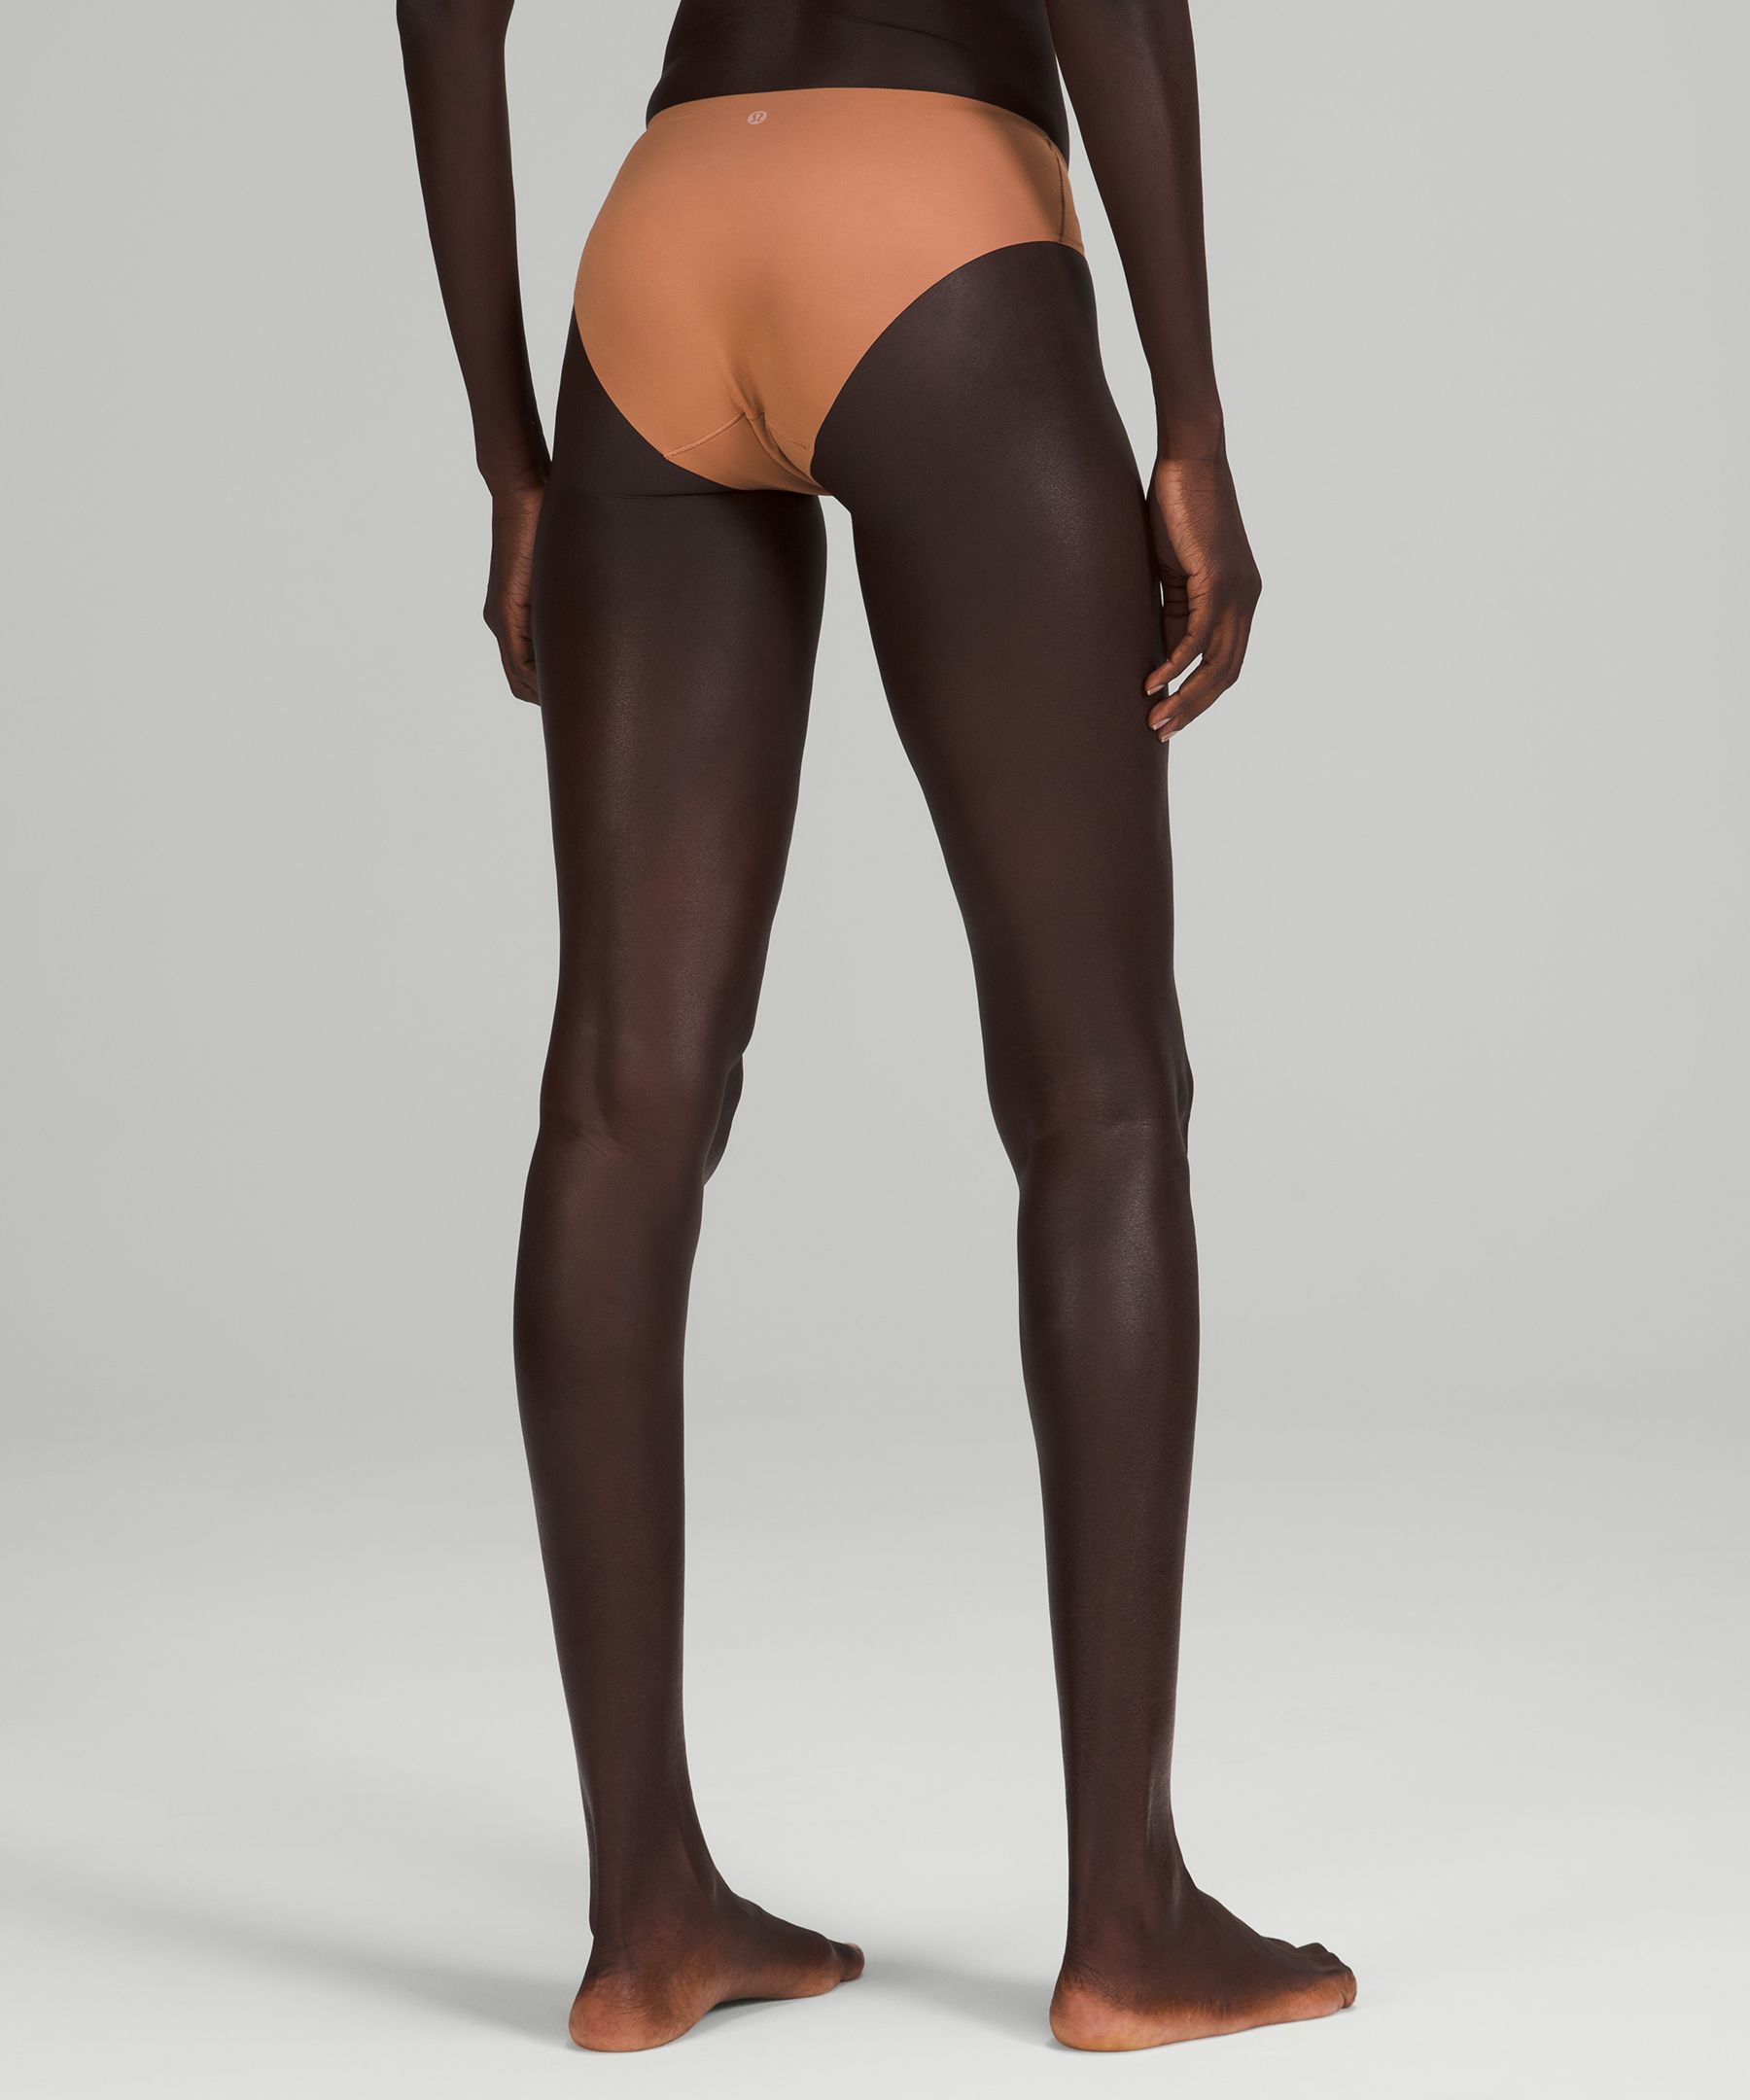 Lululemon Ladies Underwear Mula Bandhawear Bikini (Size M 6/8) RRP £18